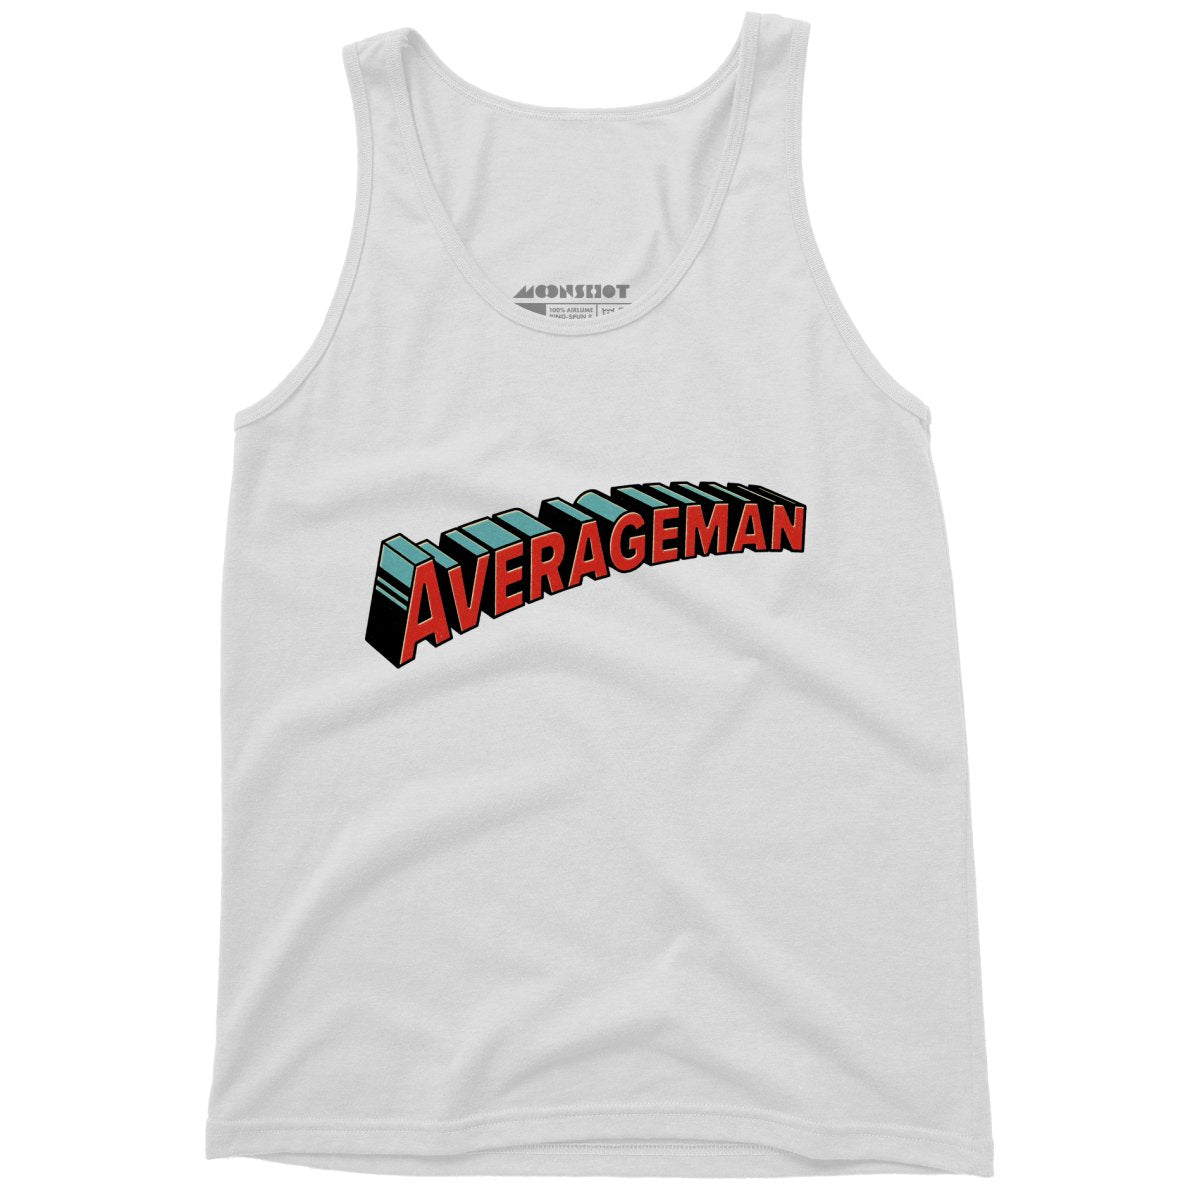 Averageman - Unisex Tank Top